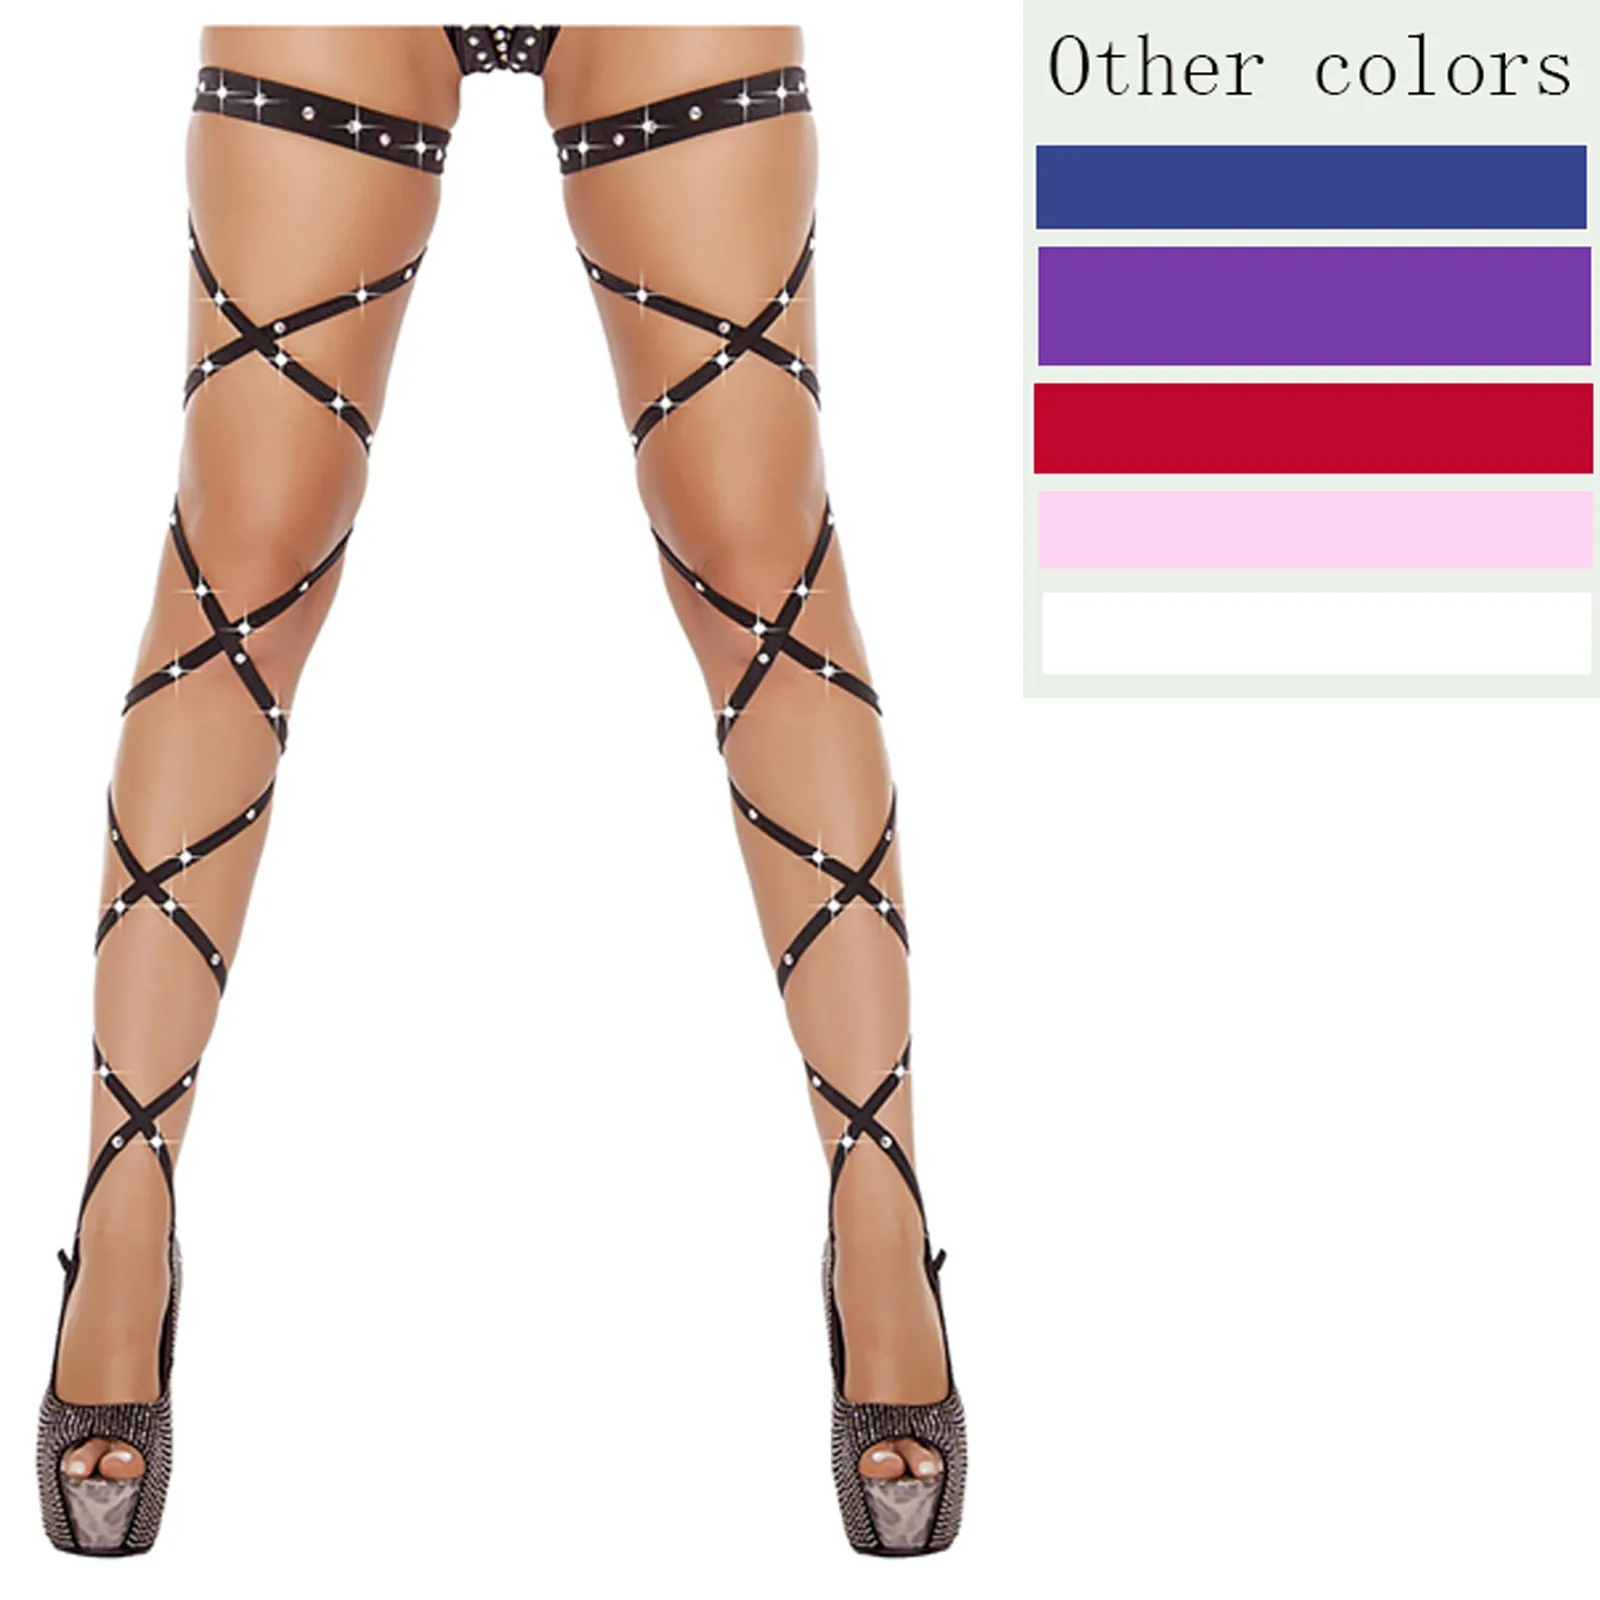 Thigh high diamond exotic stockings for women accessories for women stockings for dancers